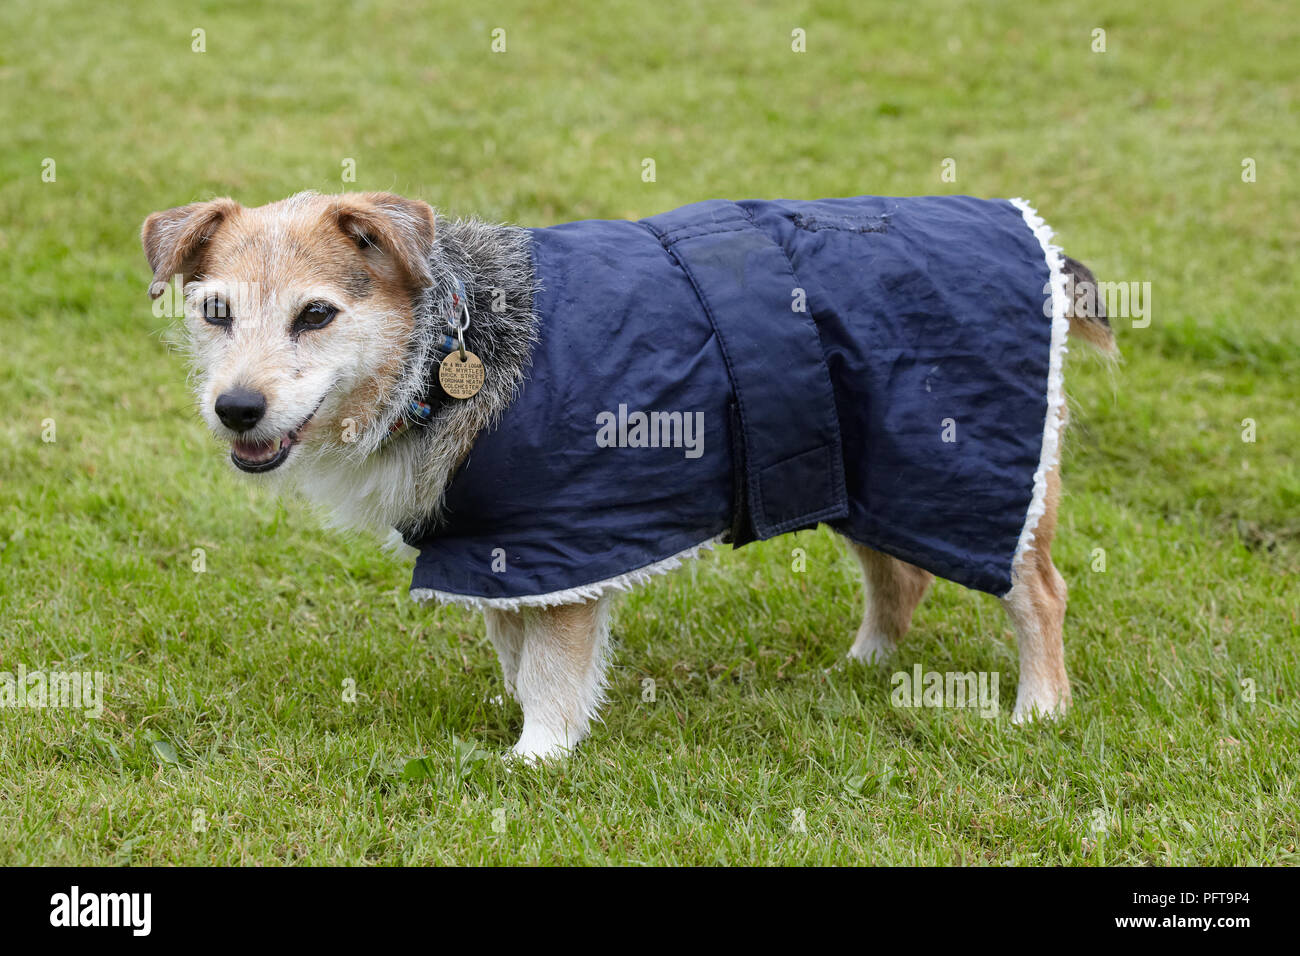 Elderly Jack Russell in garden wearing dog coat Stock Photo